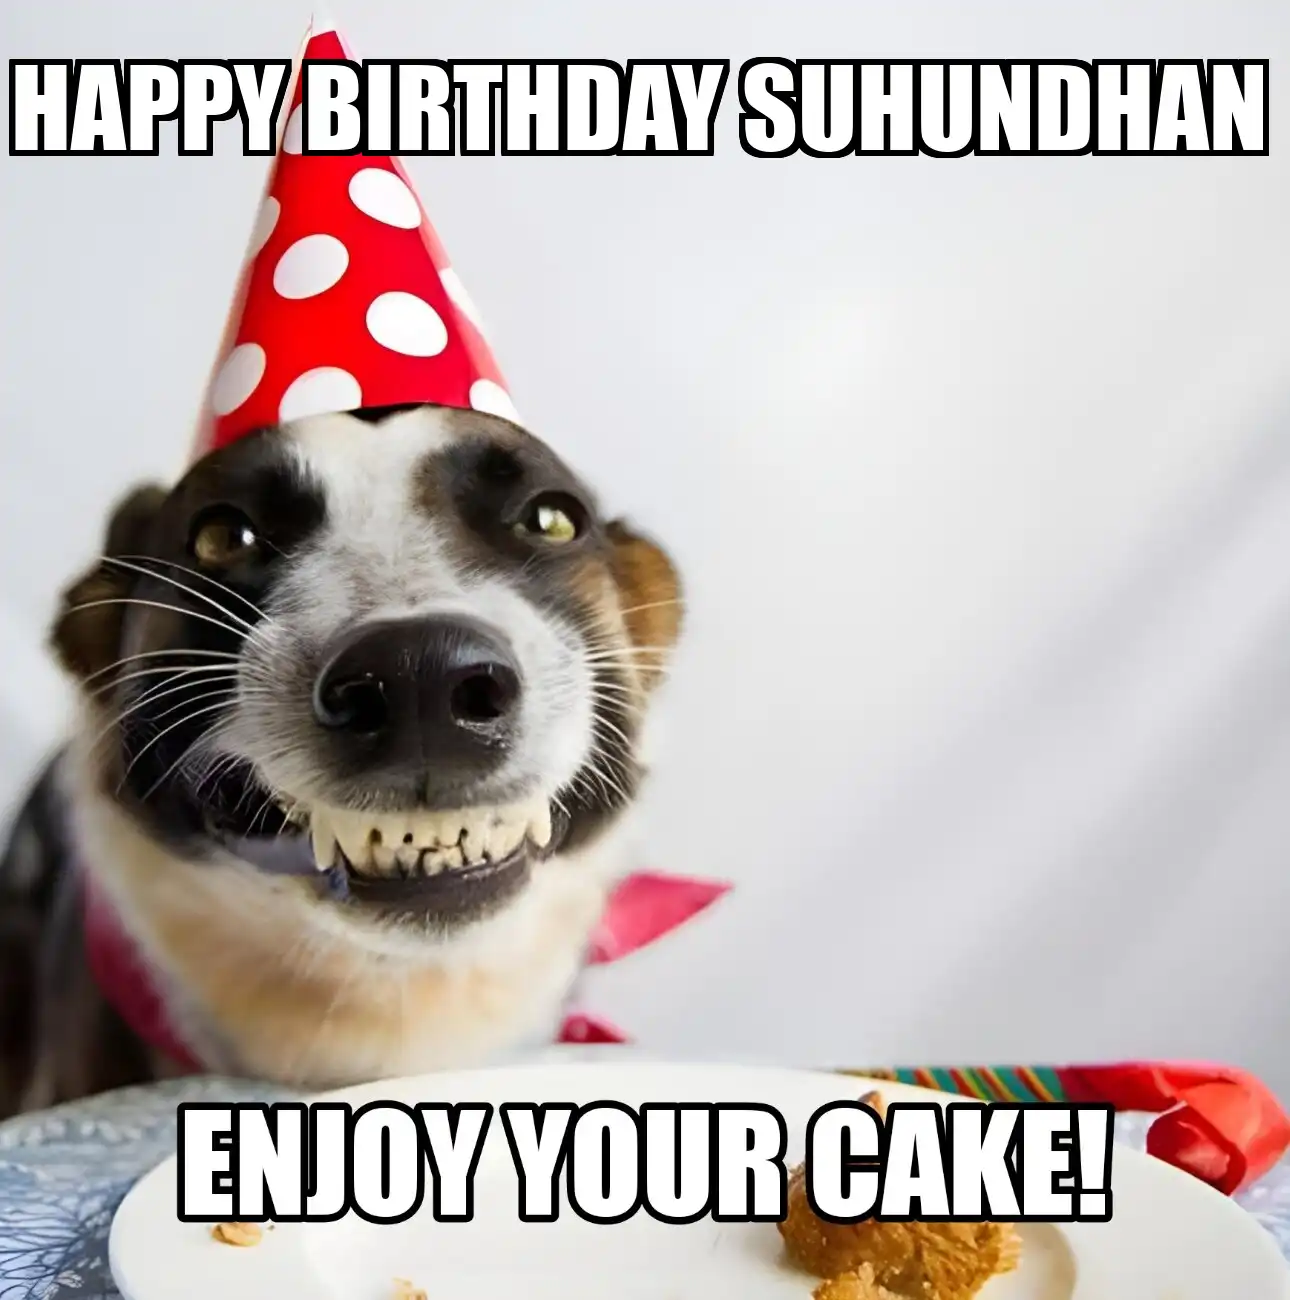 Happy Birthday Suhundhan Enjoy Your Cake Dog Meme